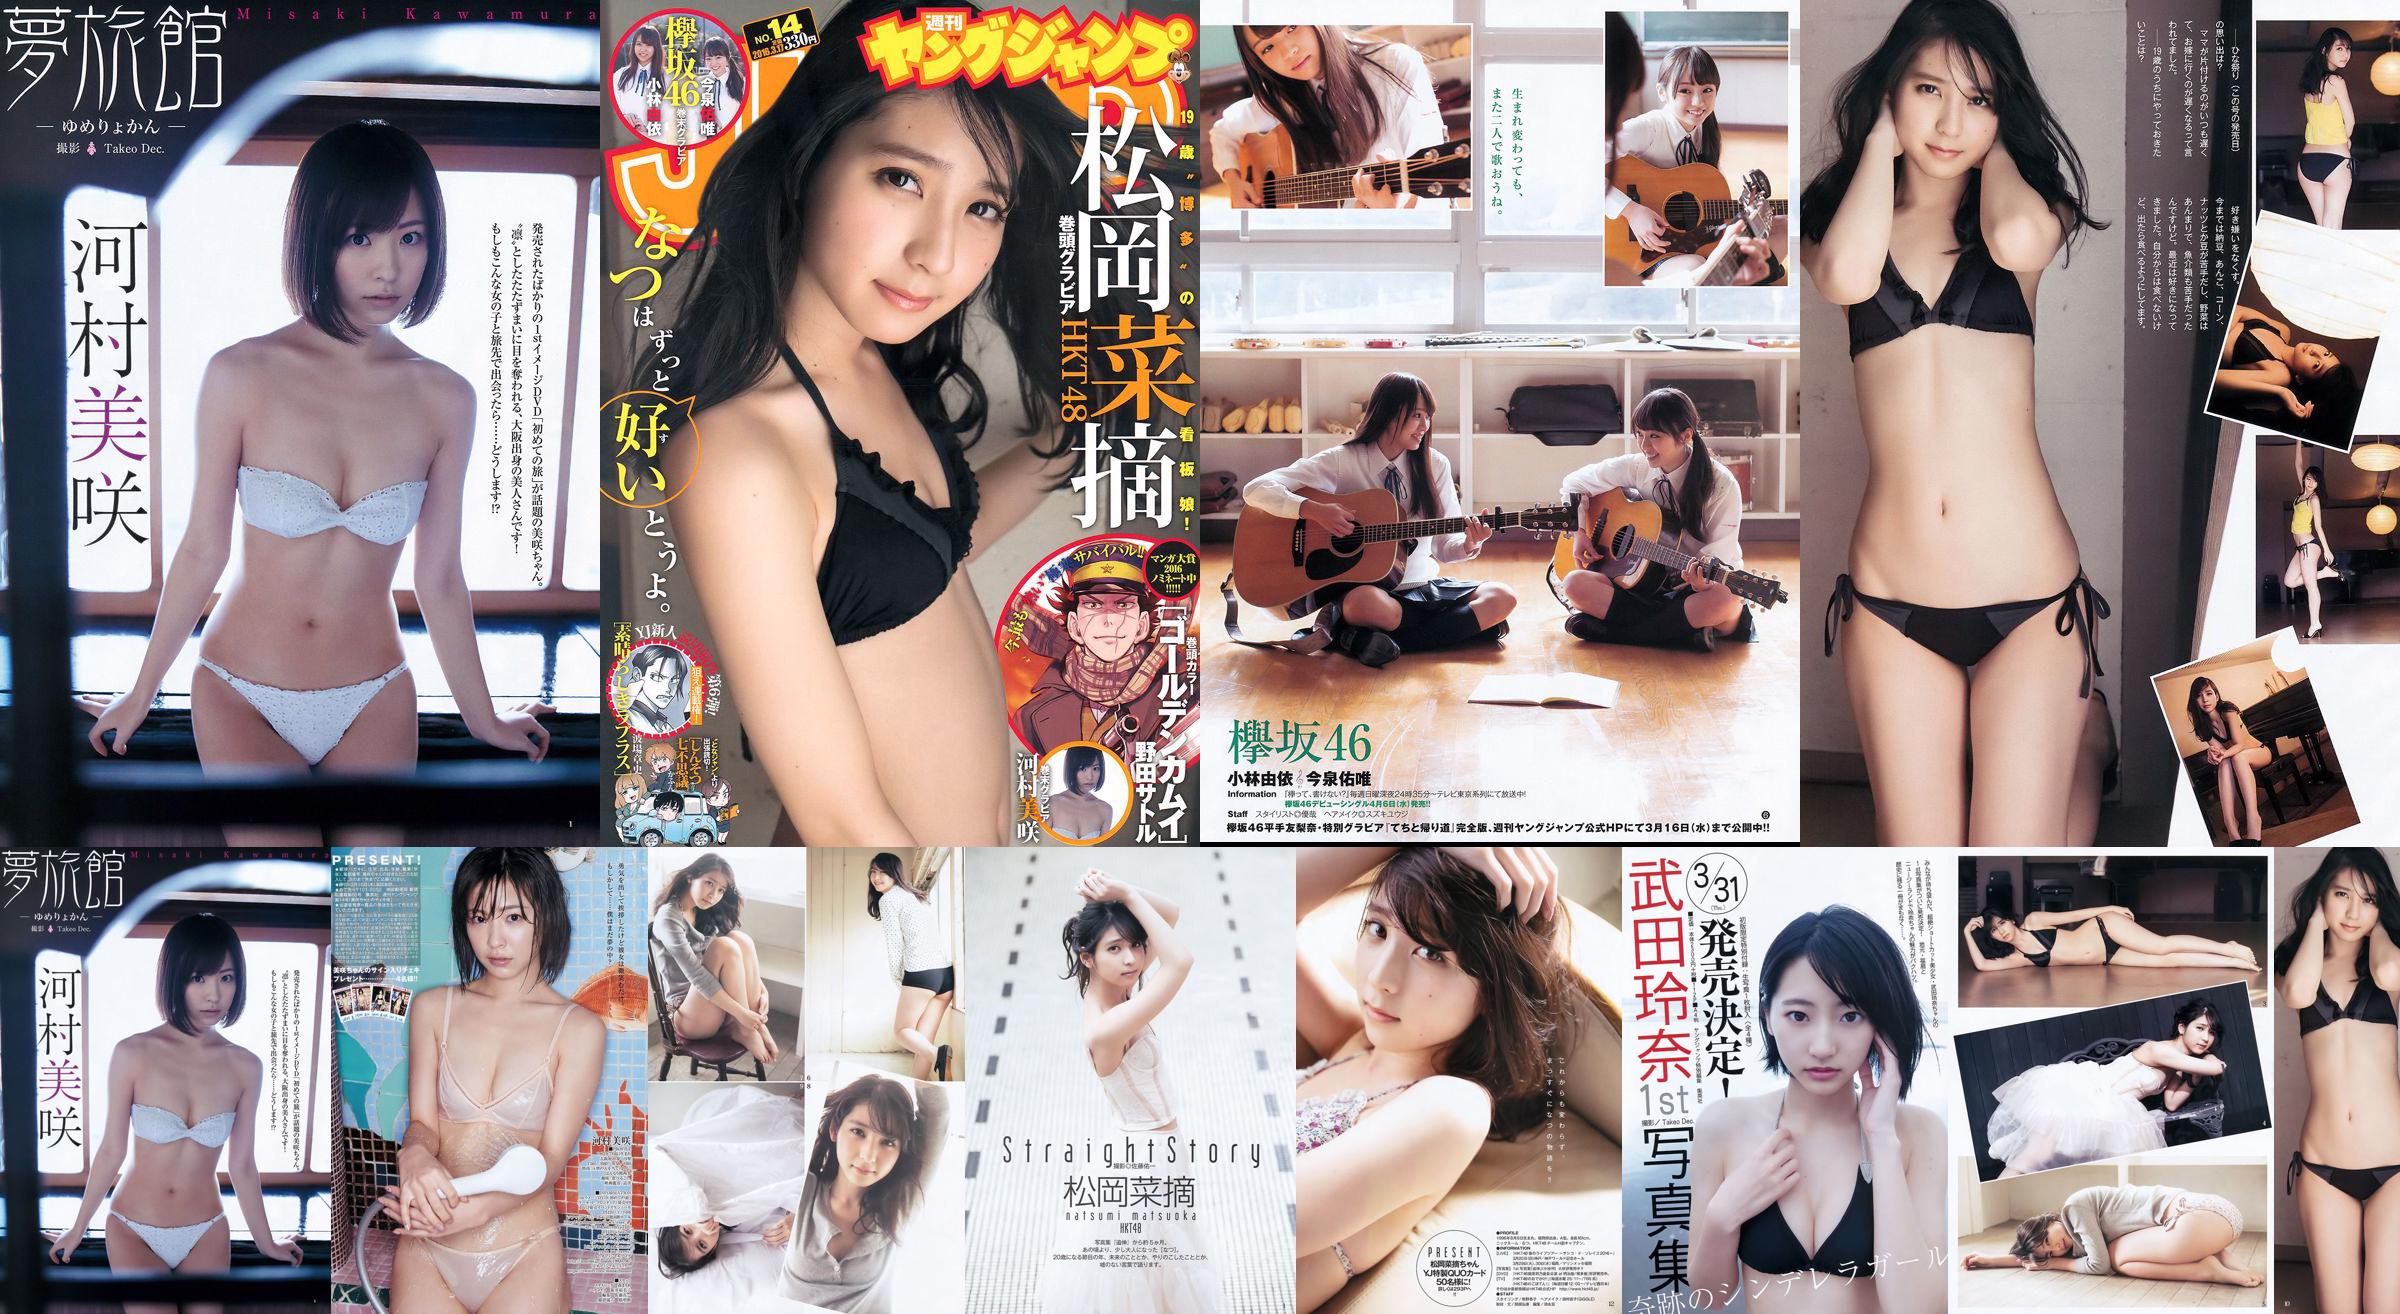 Choix de légumes Muraoka Yui Kobayashi Yui Imaizumi Misaki Kawamura [Weekly Young Jump] Magazine photo n ° 14 2016 No.6cfb2d Page 7